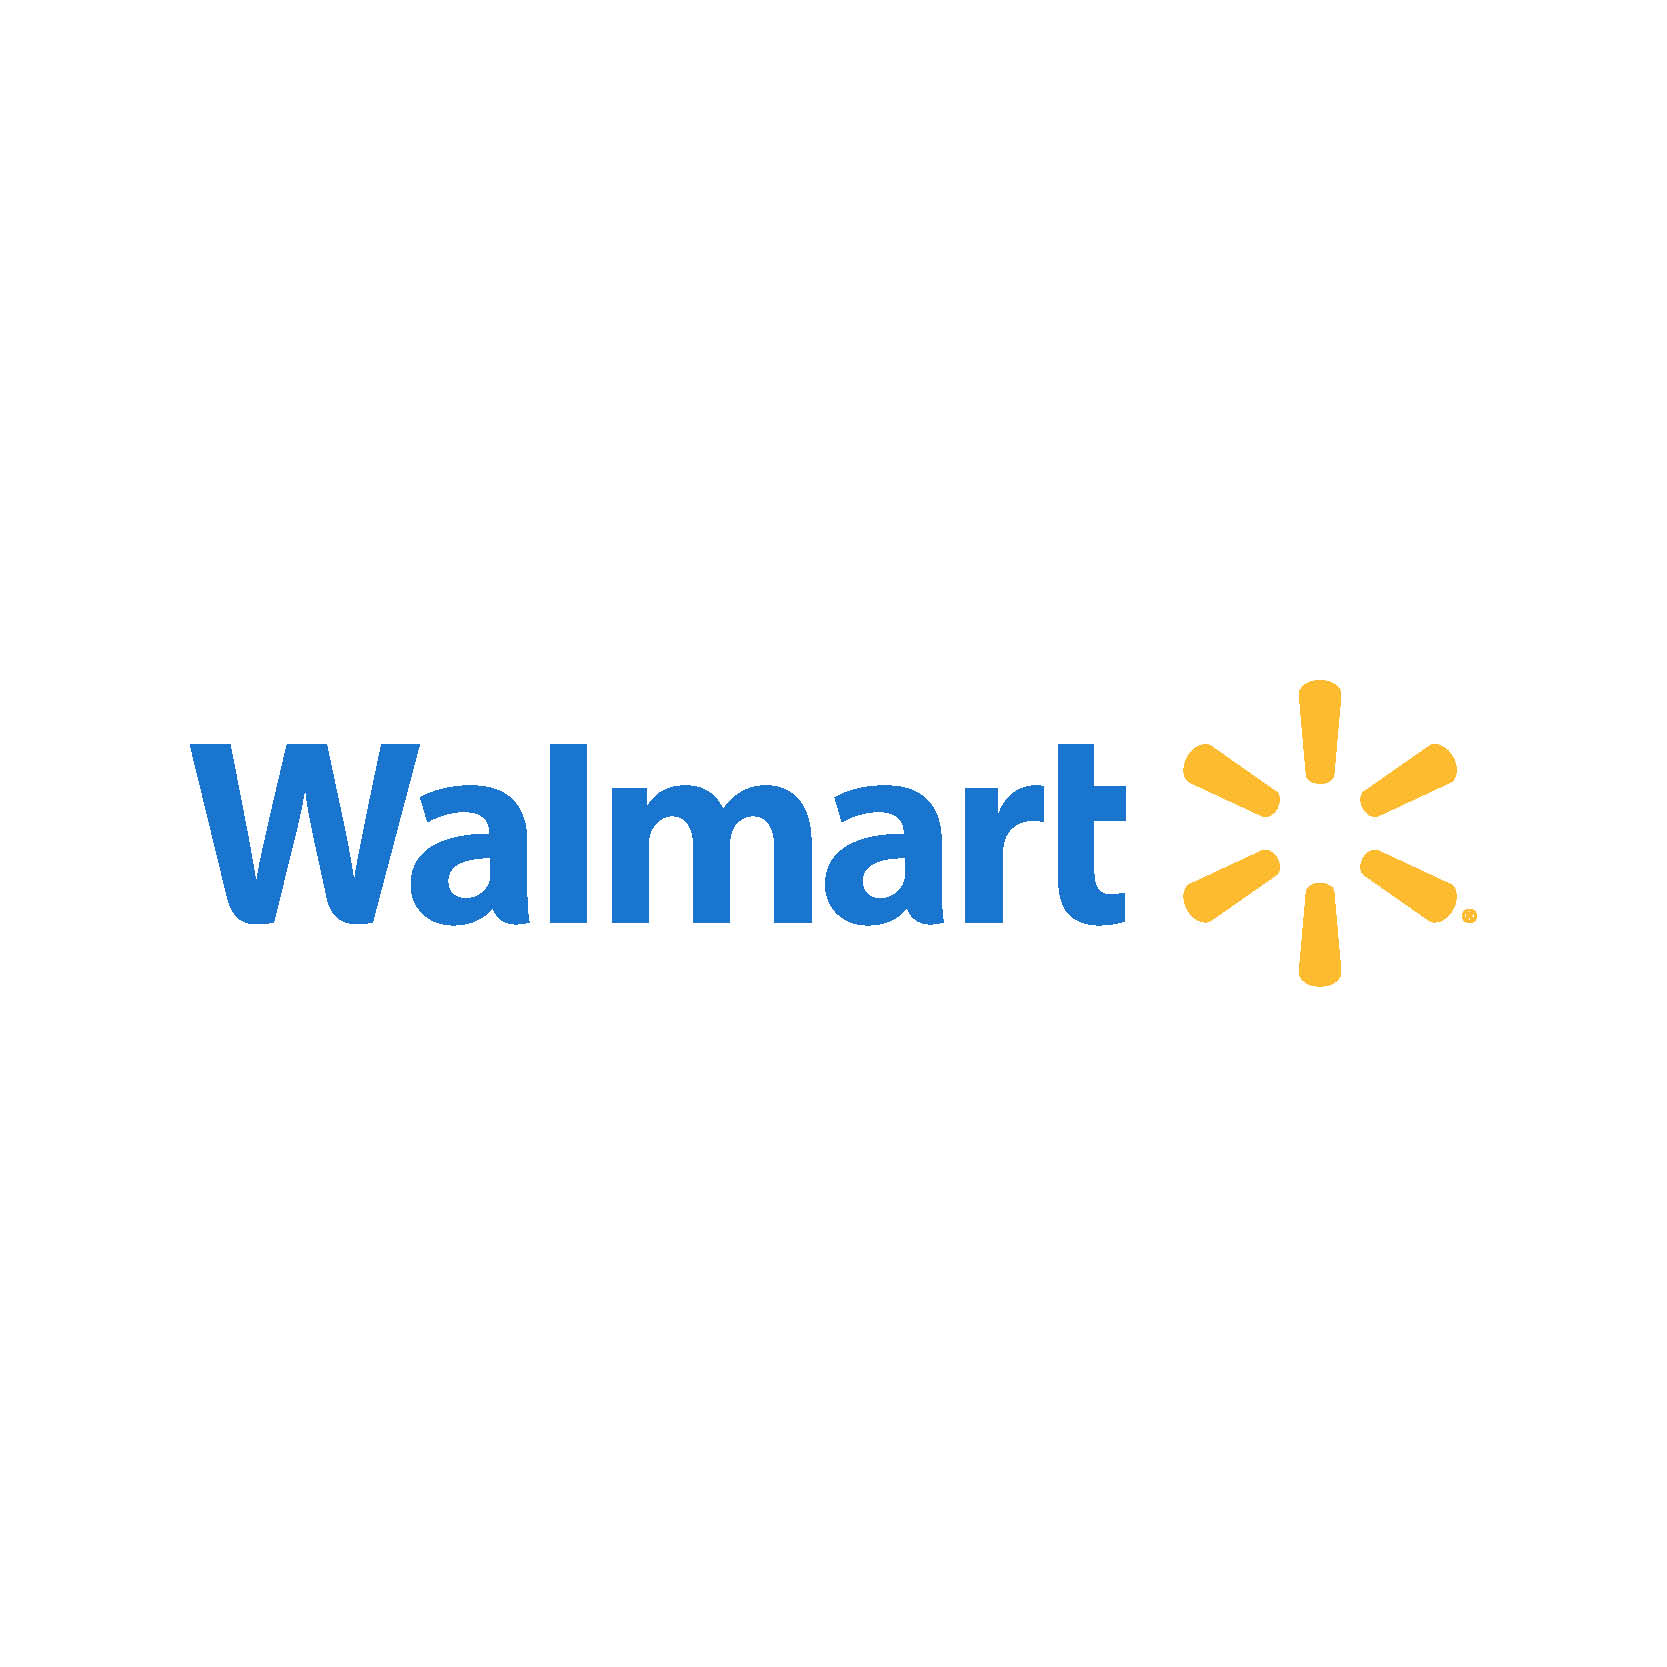 Walmart shares